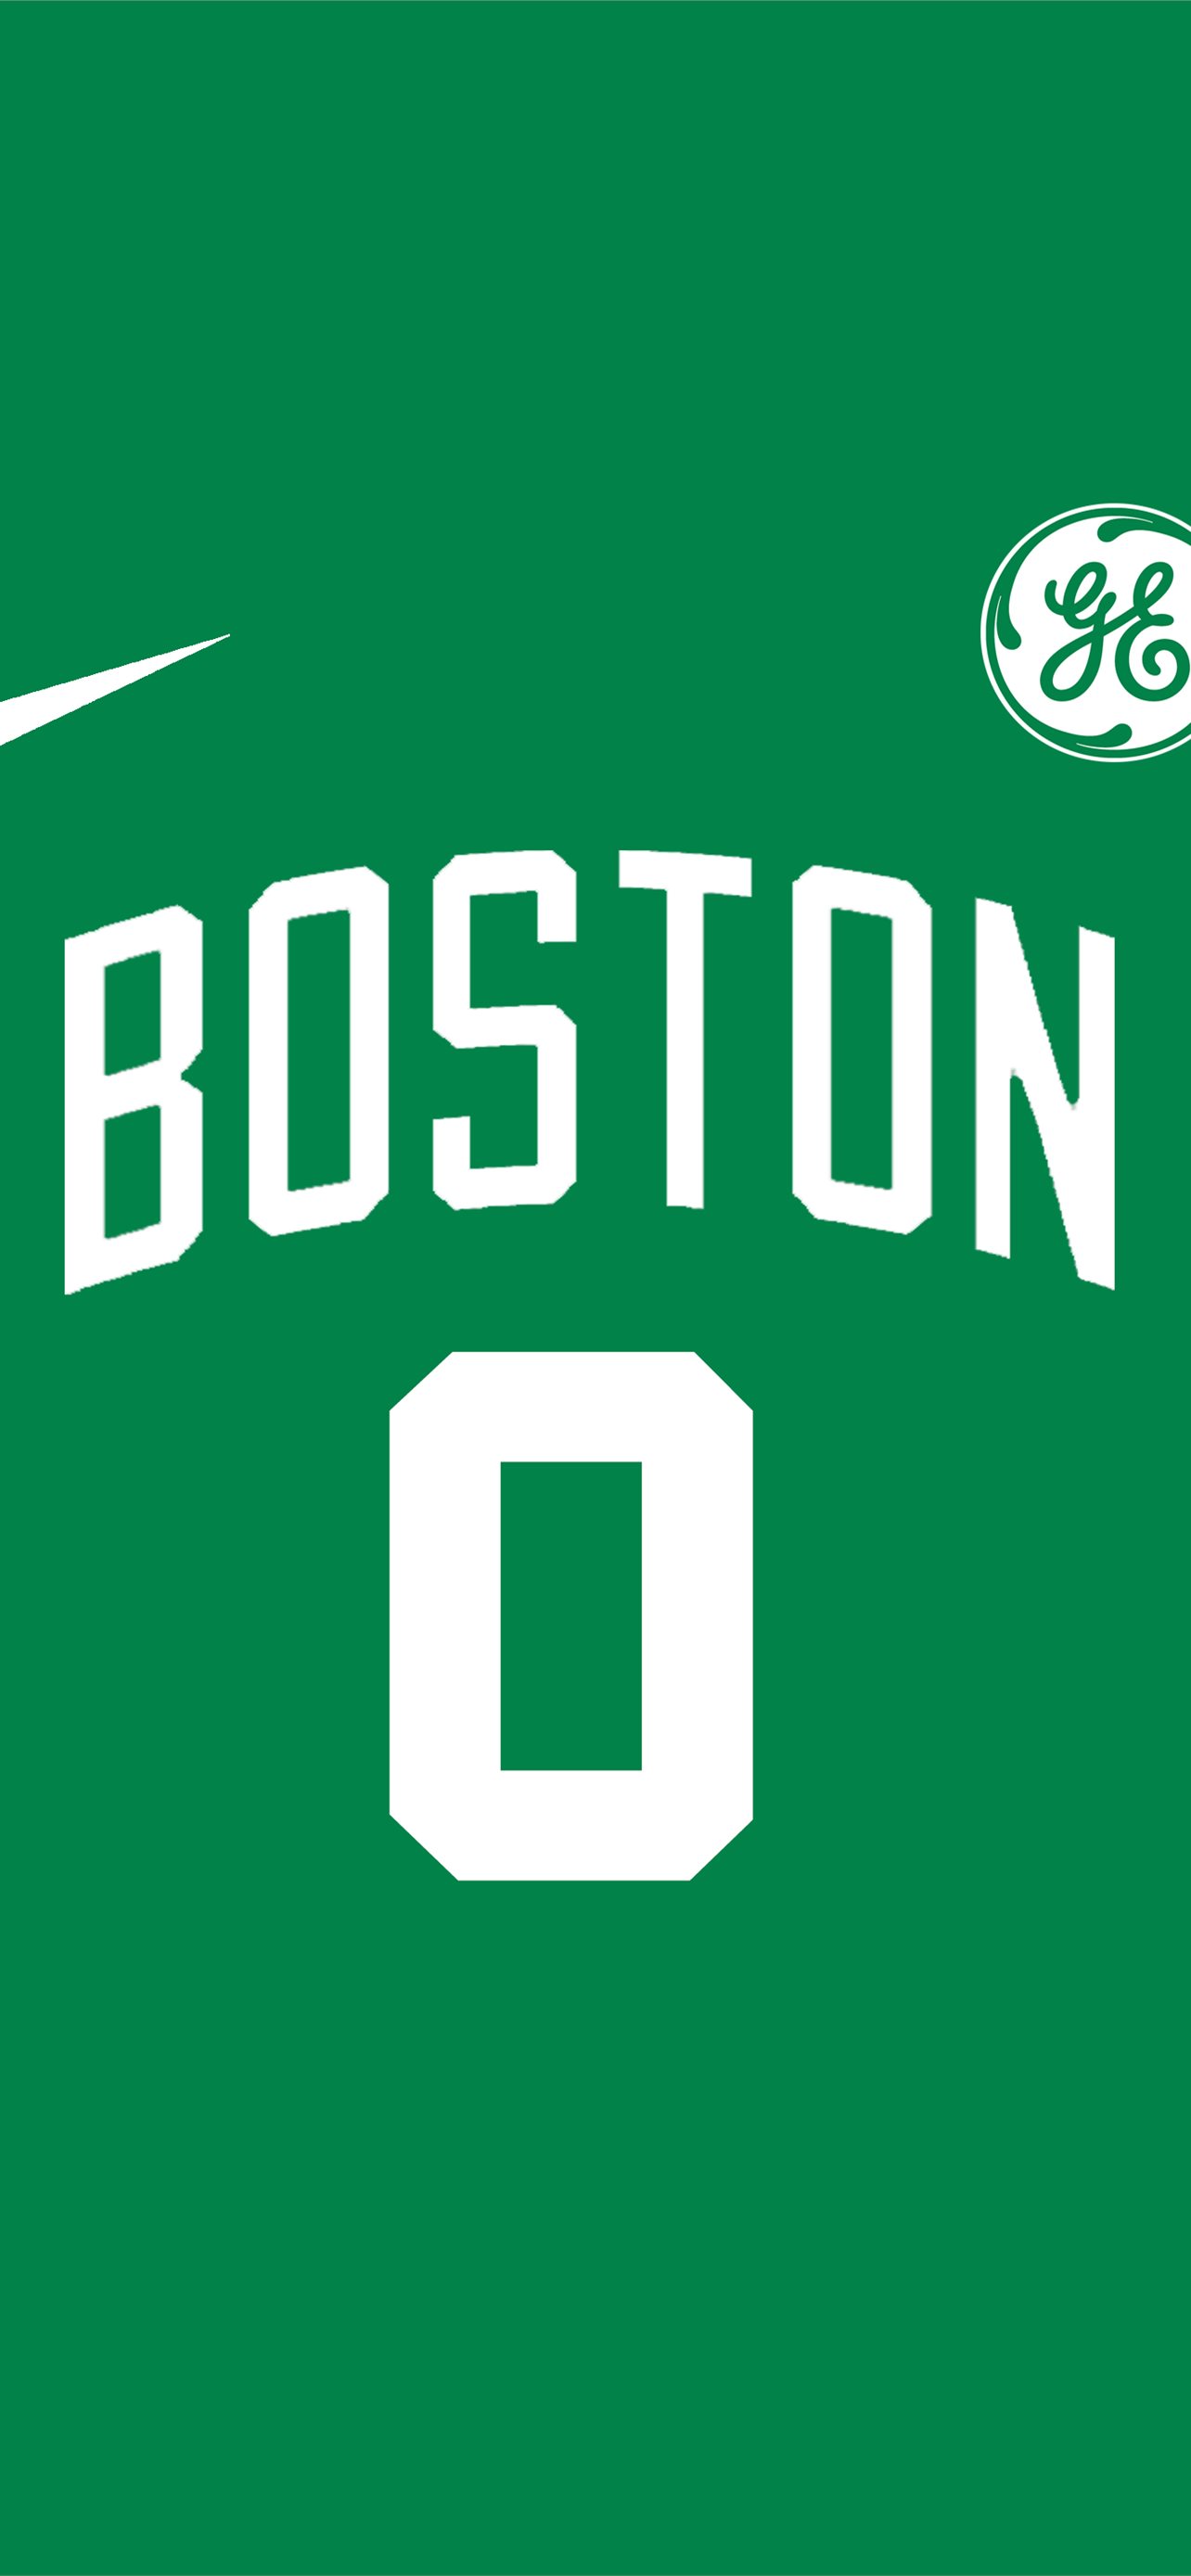 Boston Celtics 4K wallpaper download